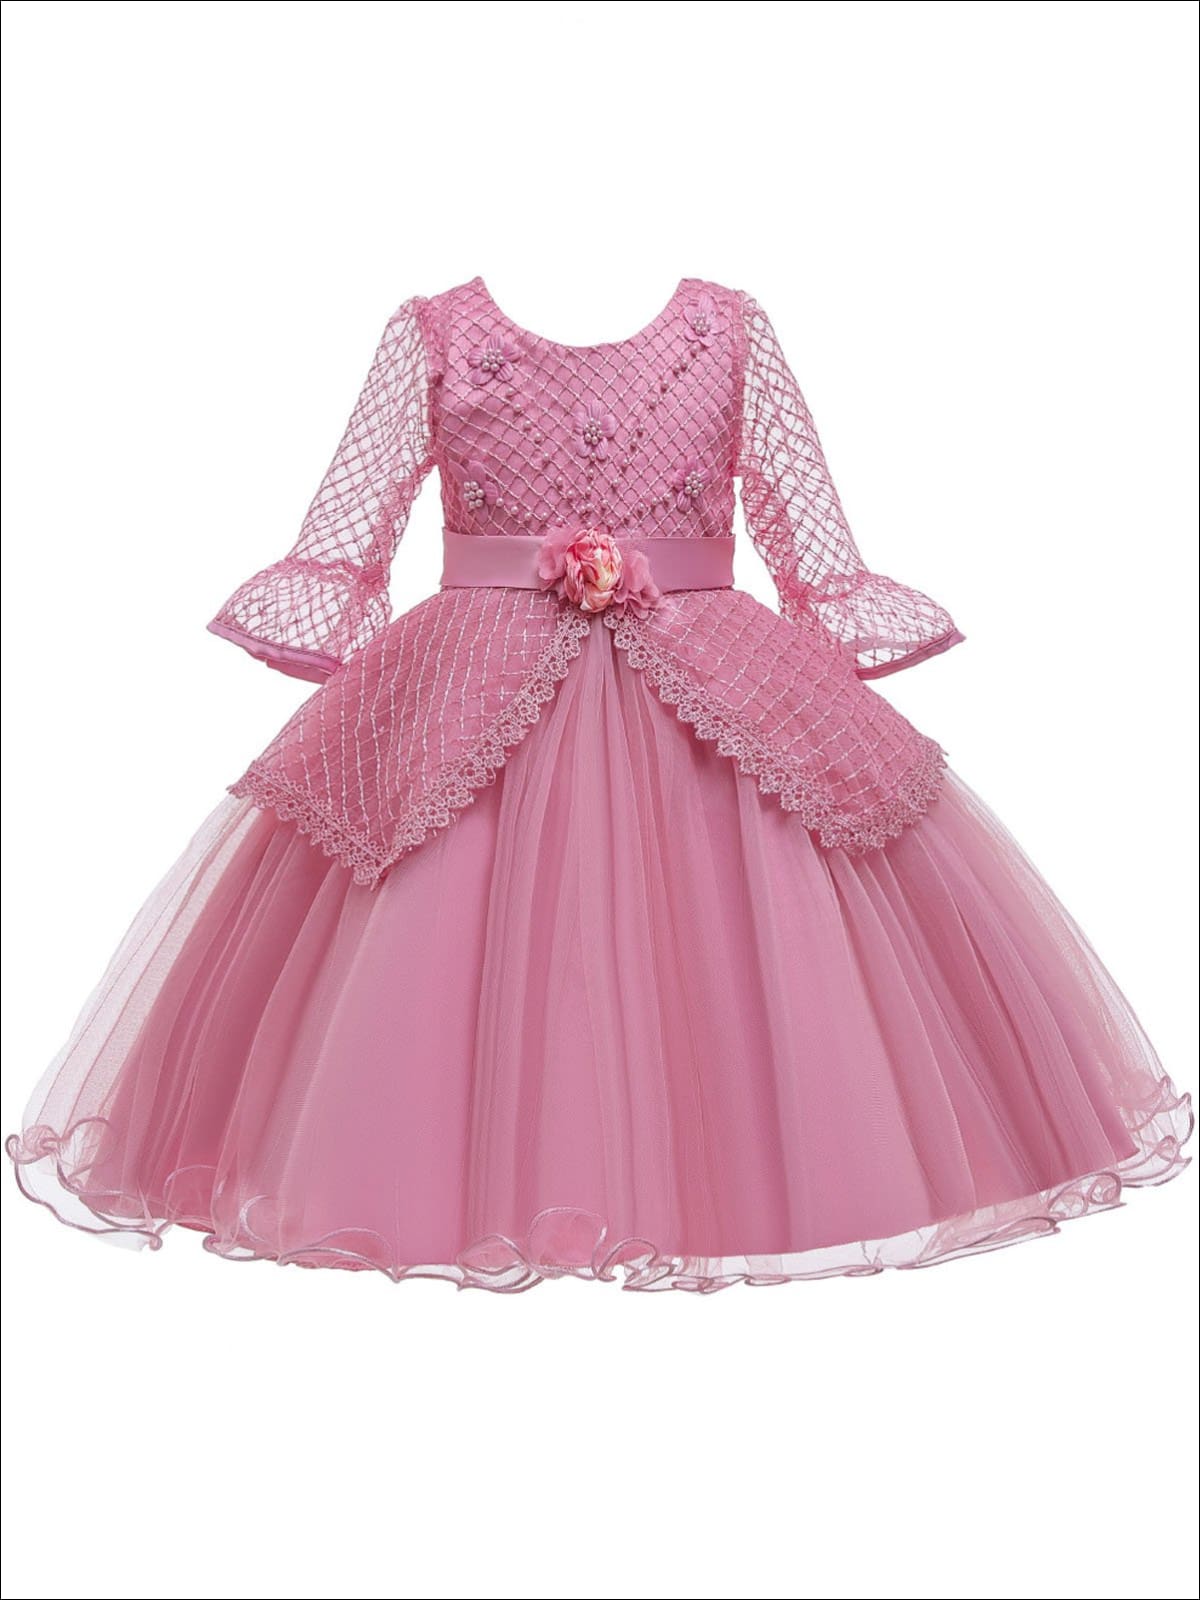 Girls Long Sleeve Lace Princess Holiday Dress With Flower Sash - Pink / 3T - Girls Fall Dressy Dress